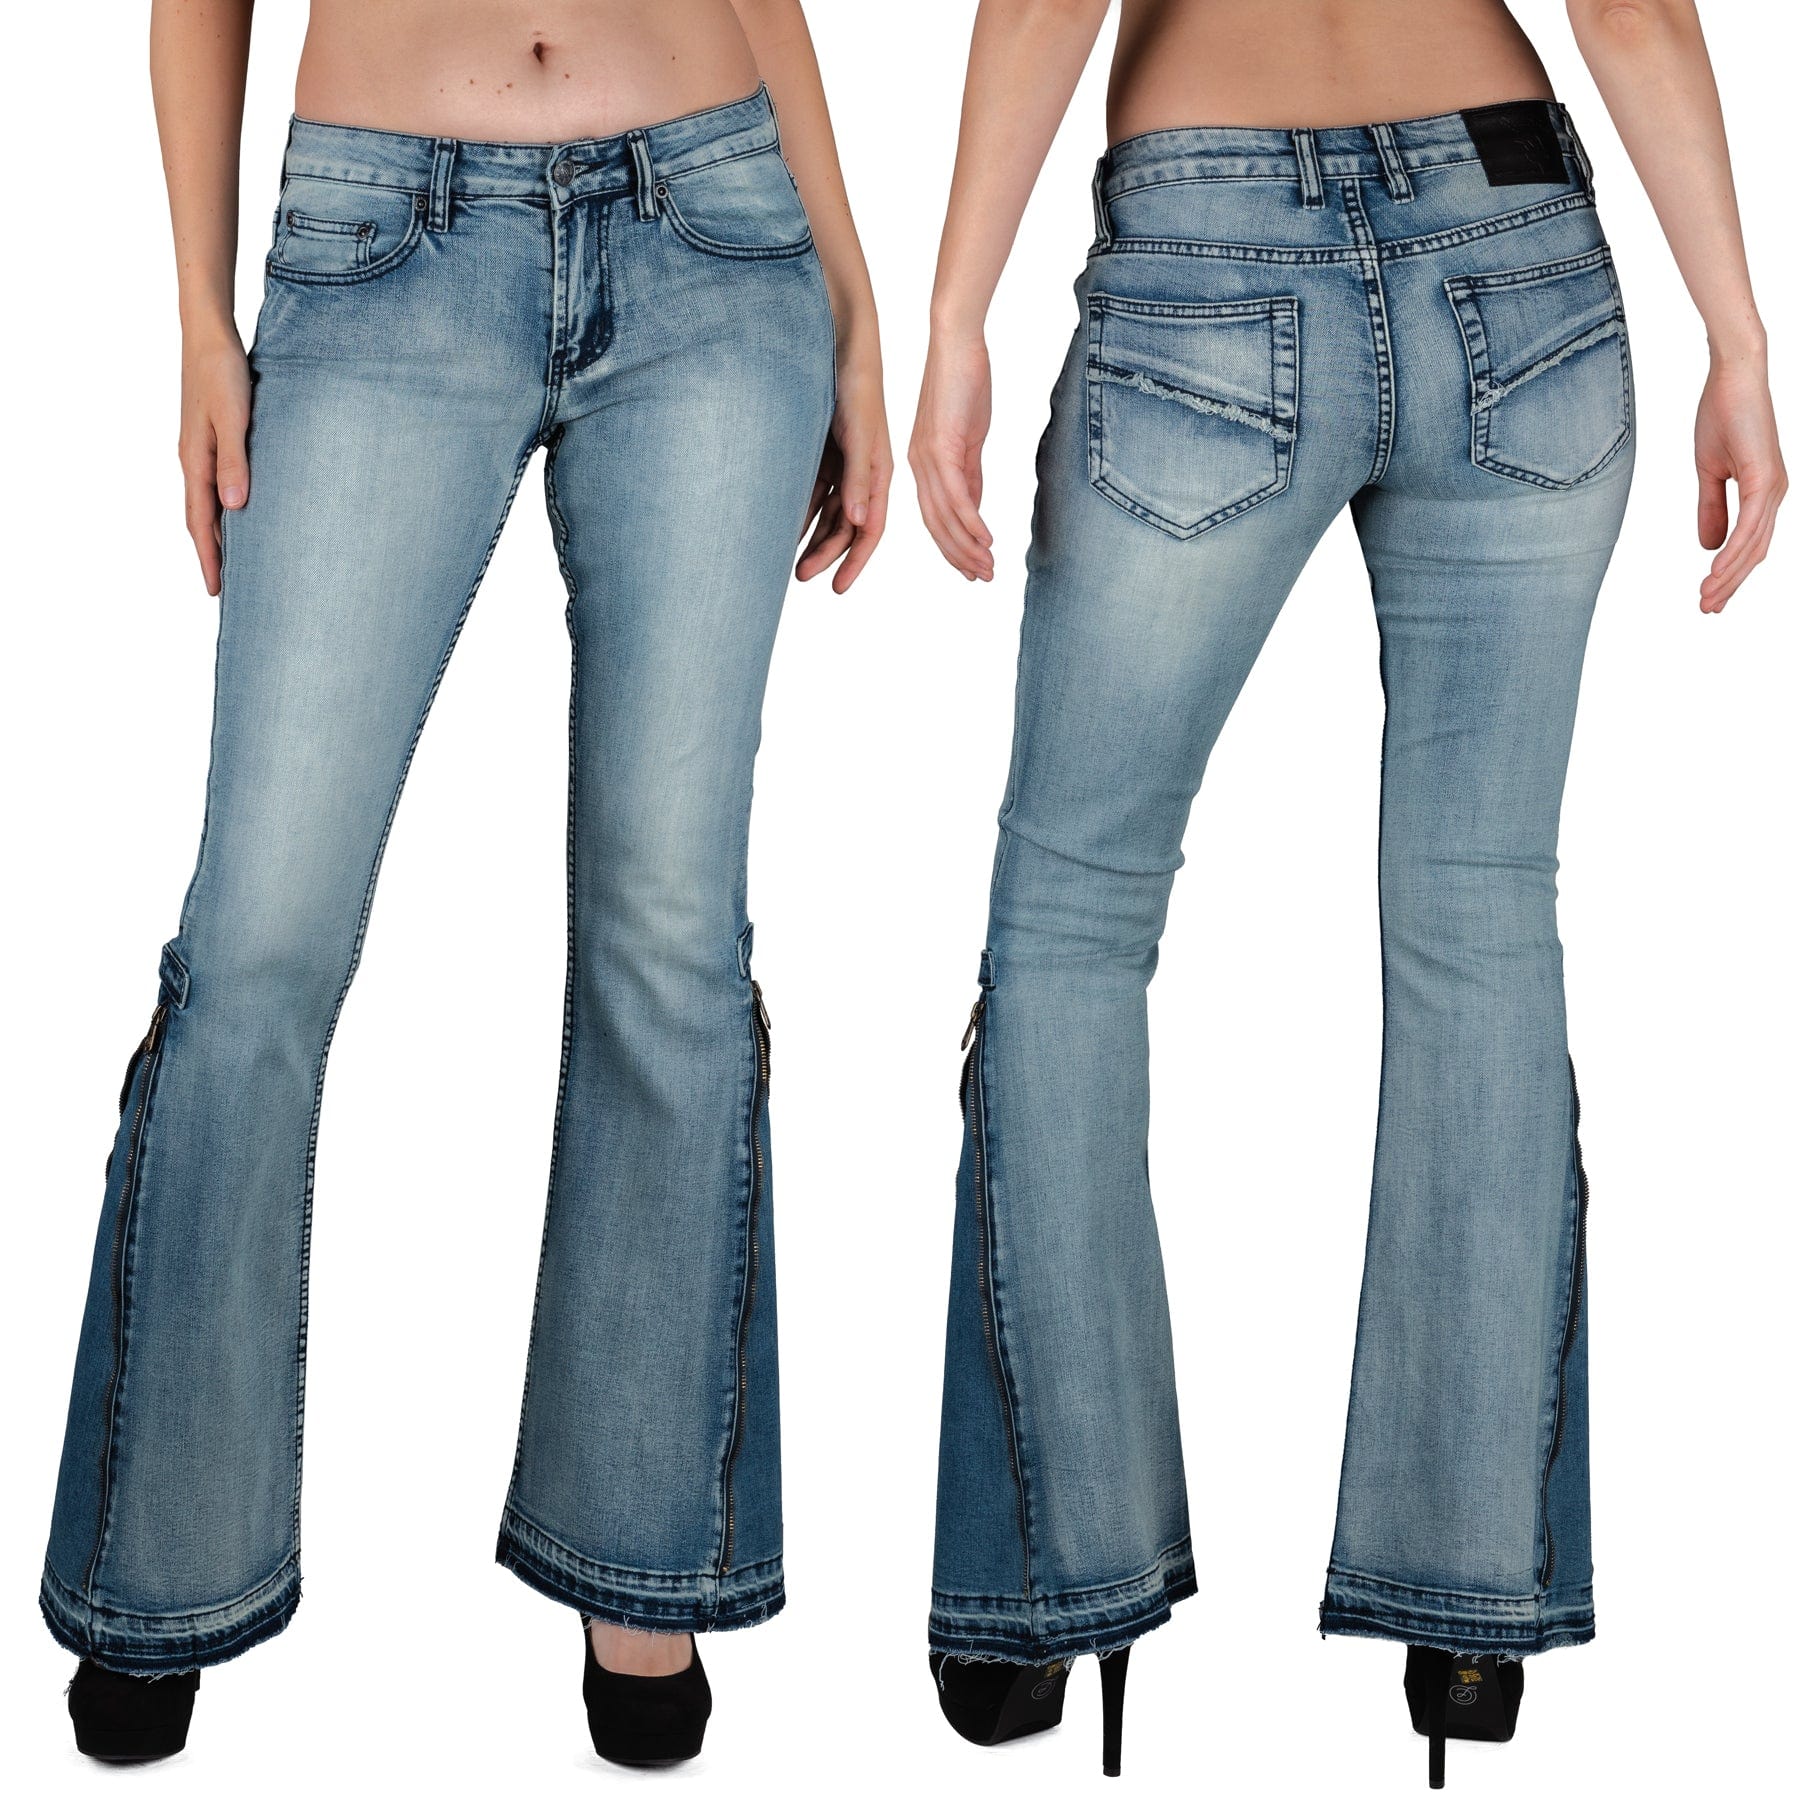 Wornstar Clothing Pants Hellraiser Side Zipper Unisex Jeans - Classic Blue